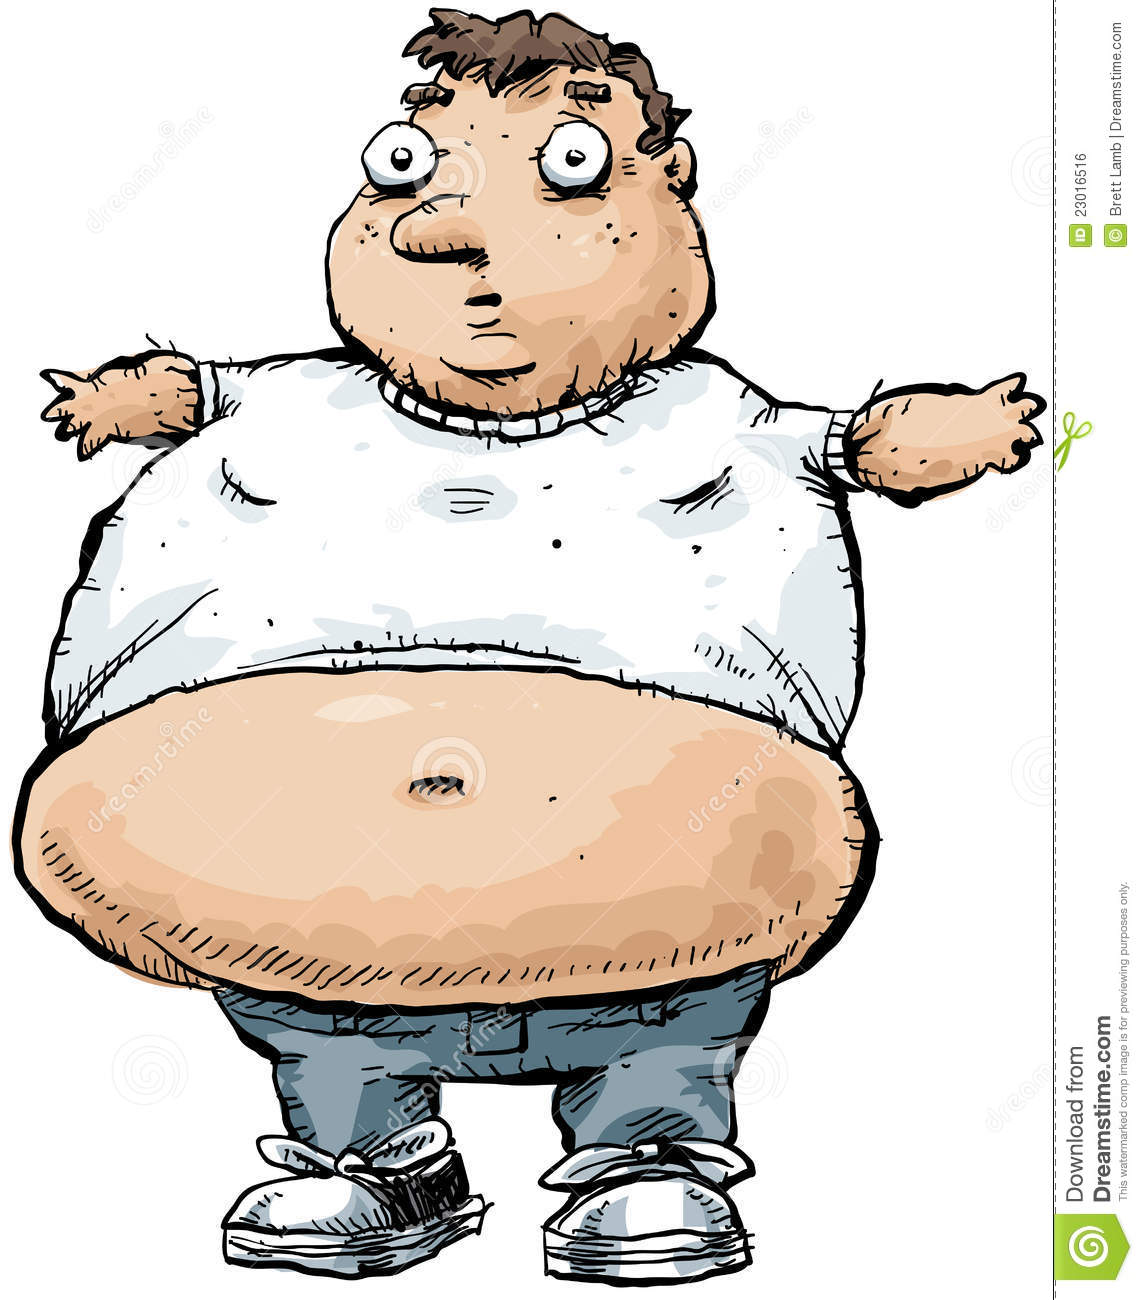 Fat Man Royalty Free Stock Image   Image  23016516